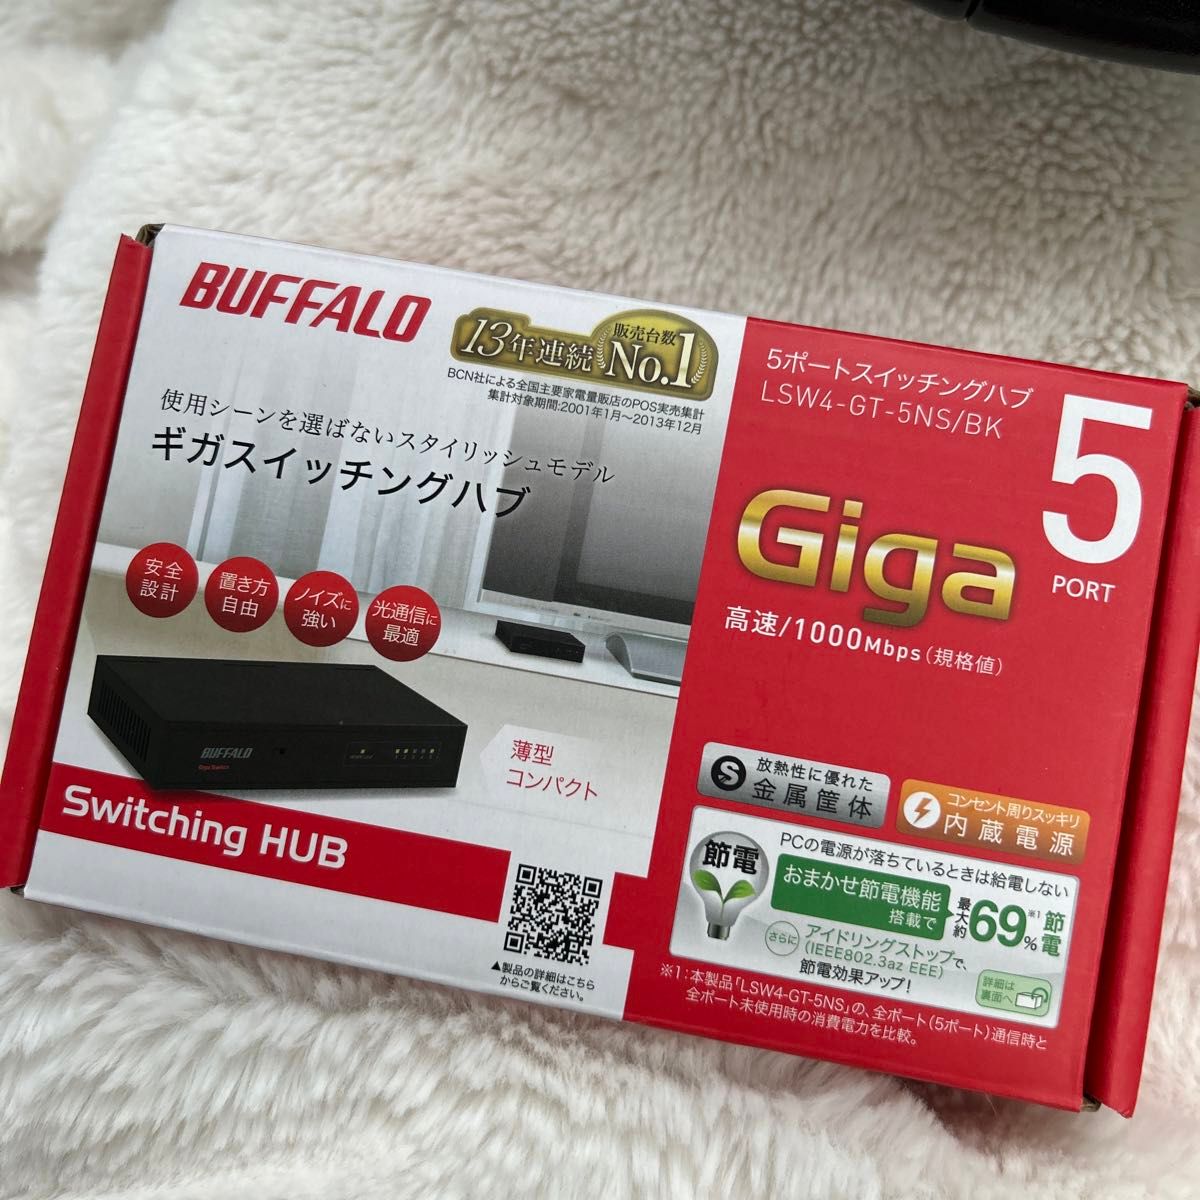 BUFFALO Giga対応 金属筺体 電源内蔵 5ポート ブラック スイッチングハブ LSW4-GT-5NS/BK